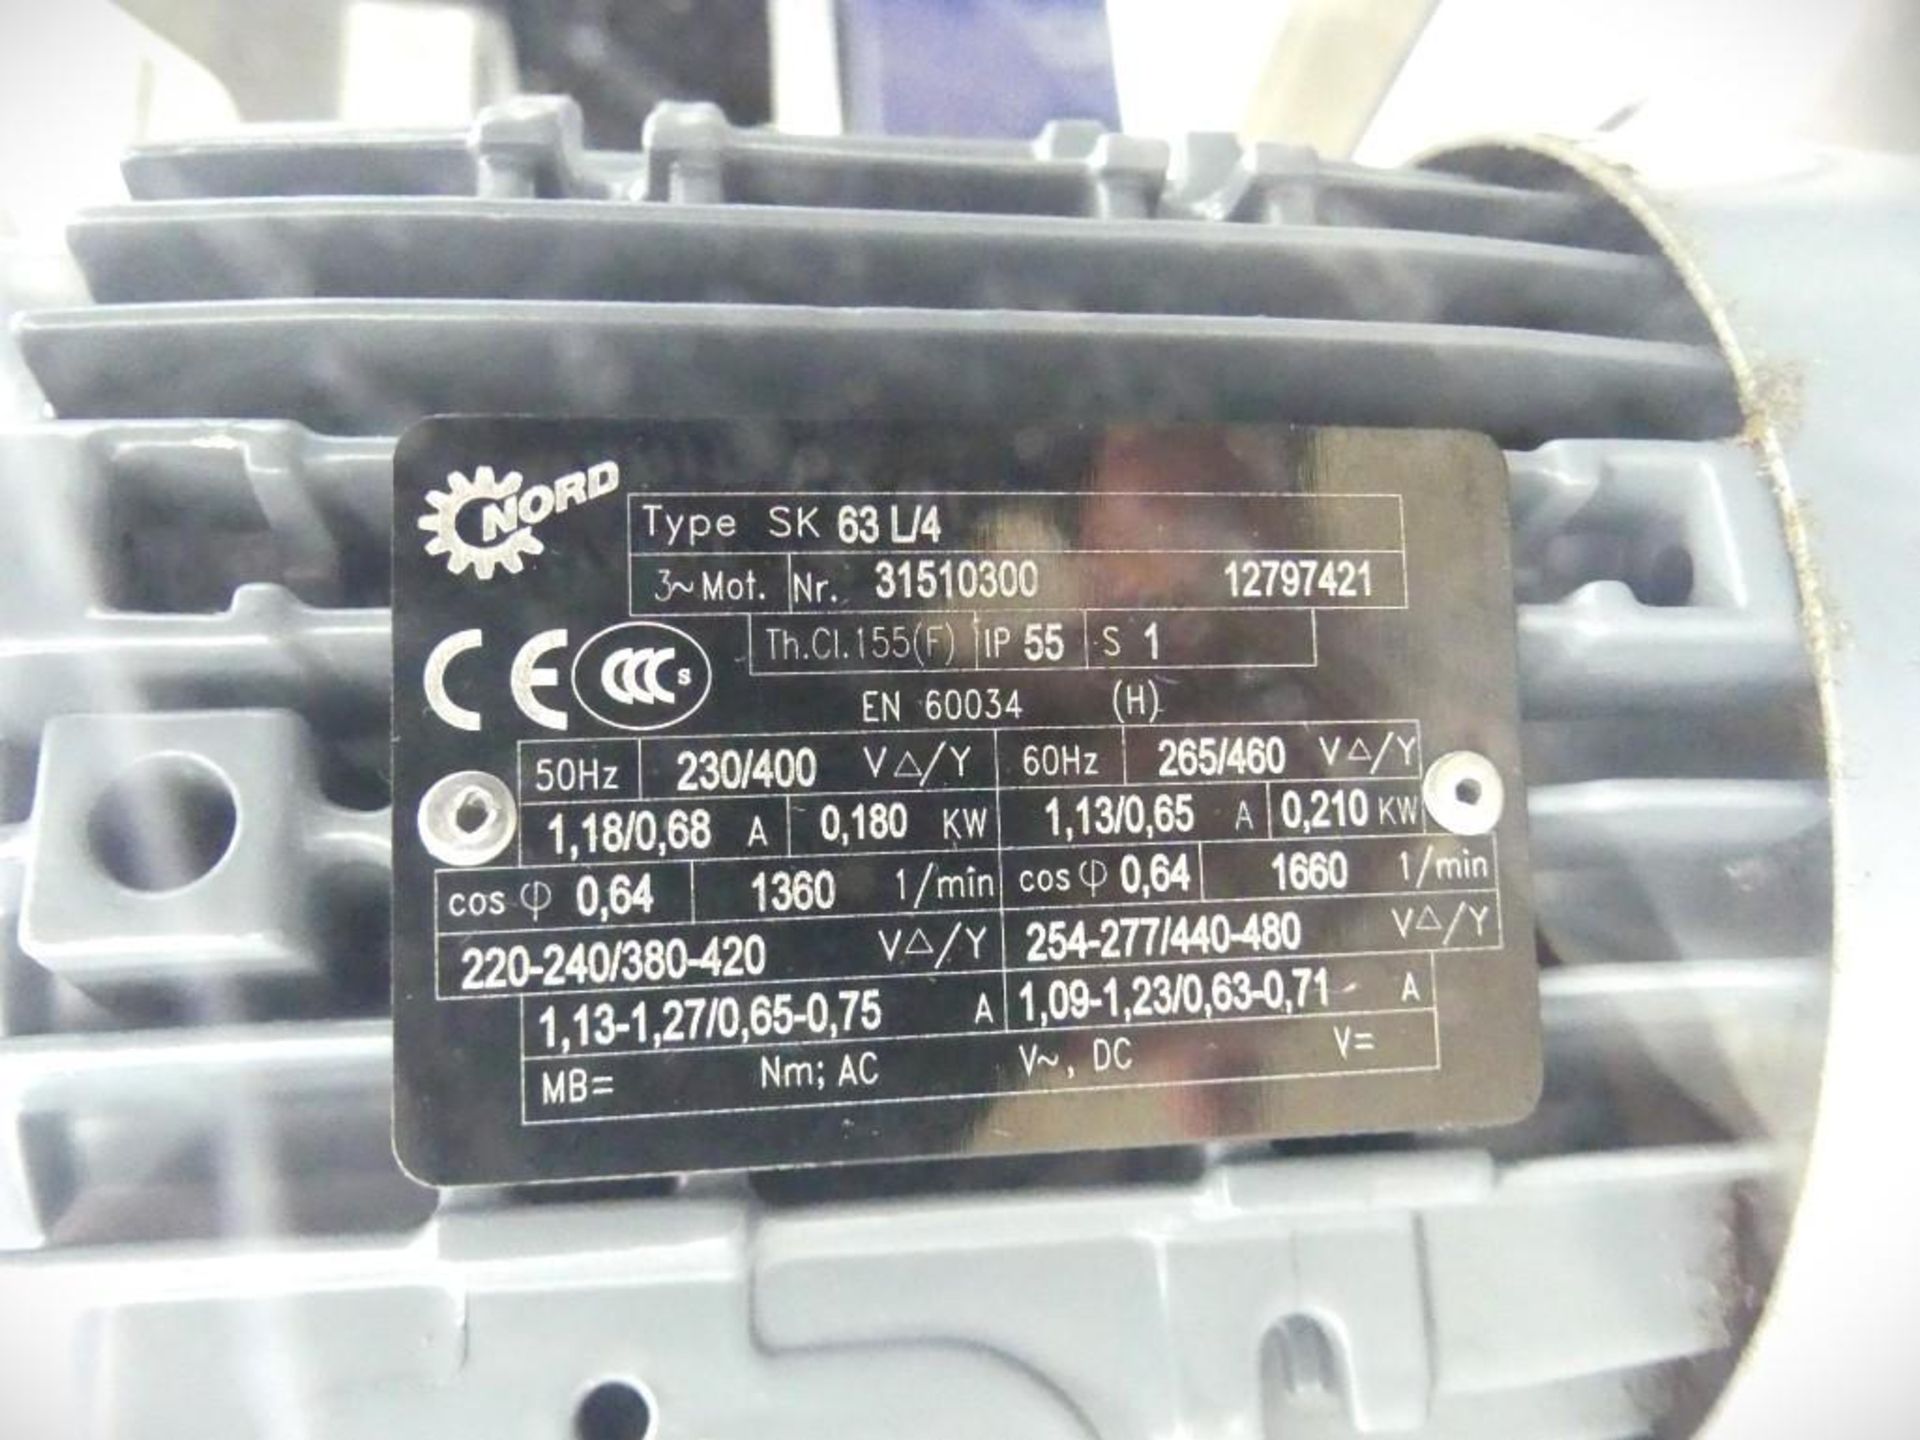 Lantech C-1000 Tape Bottom Seal Automatic Case Erector - Image 16 of 40